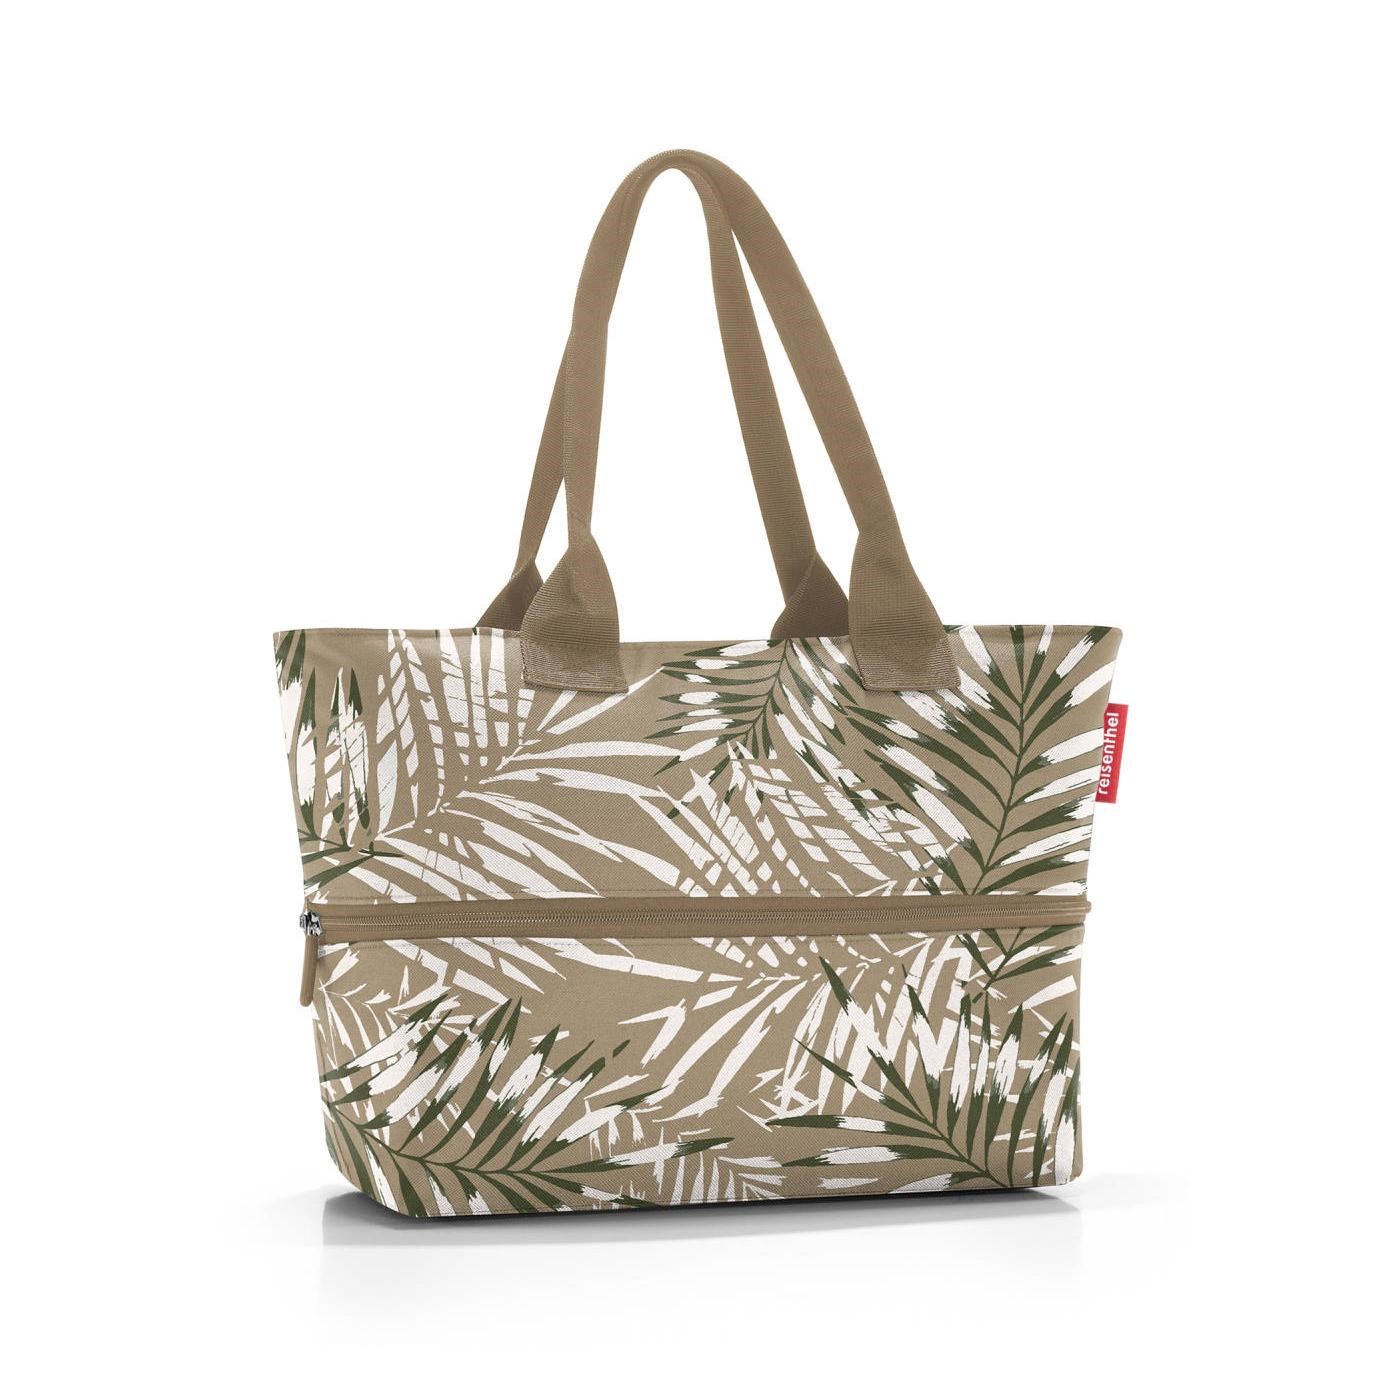 Chytrá taška přes rameno Shopper e1 jungle sand_6